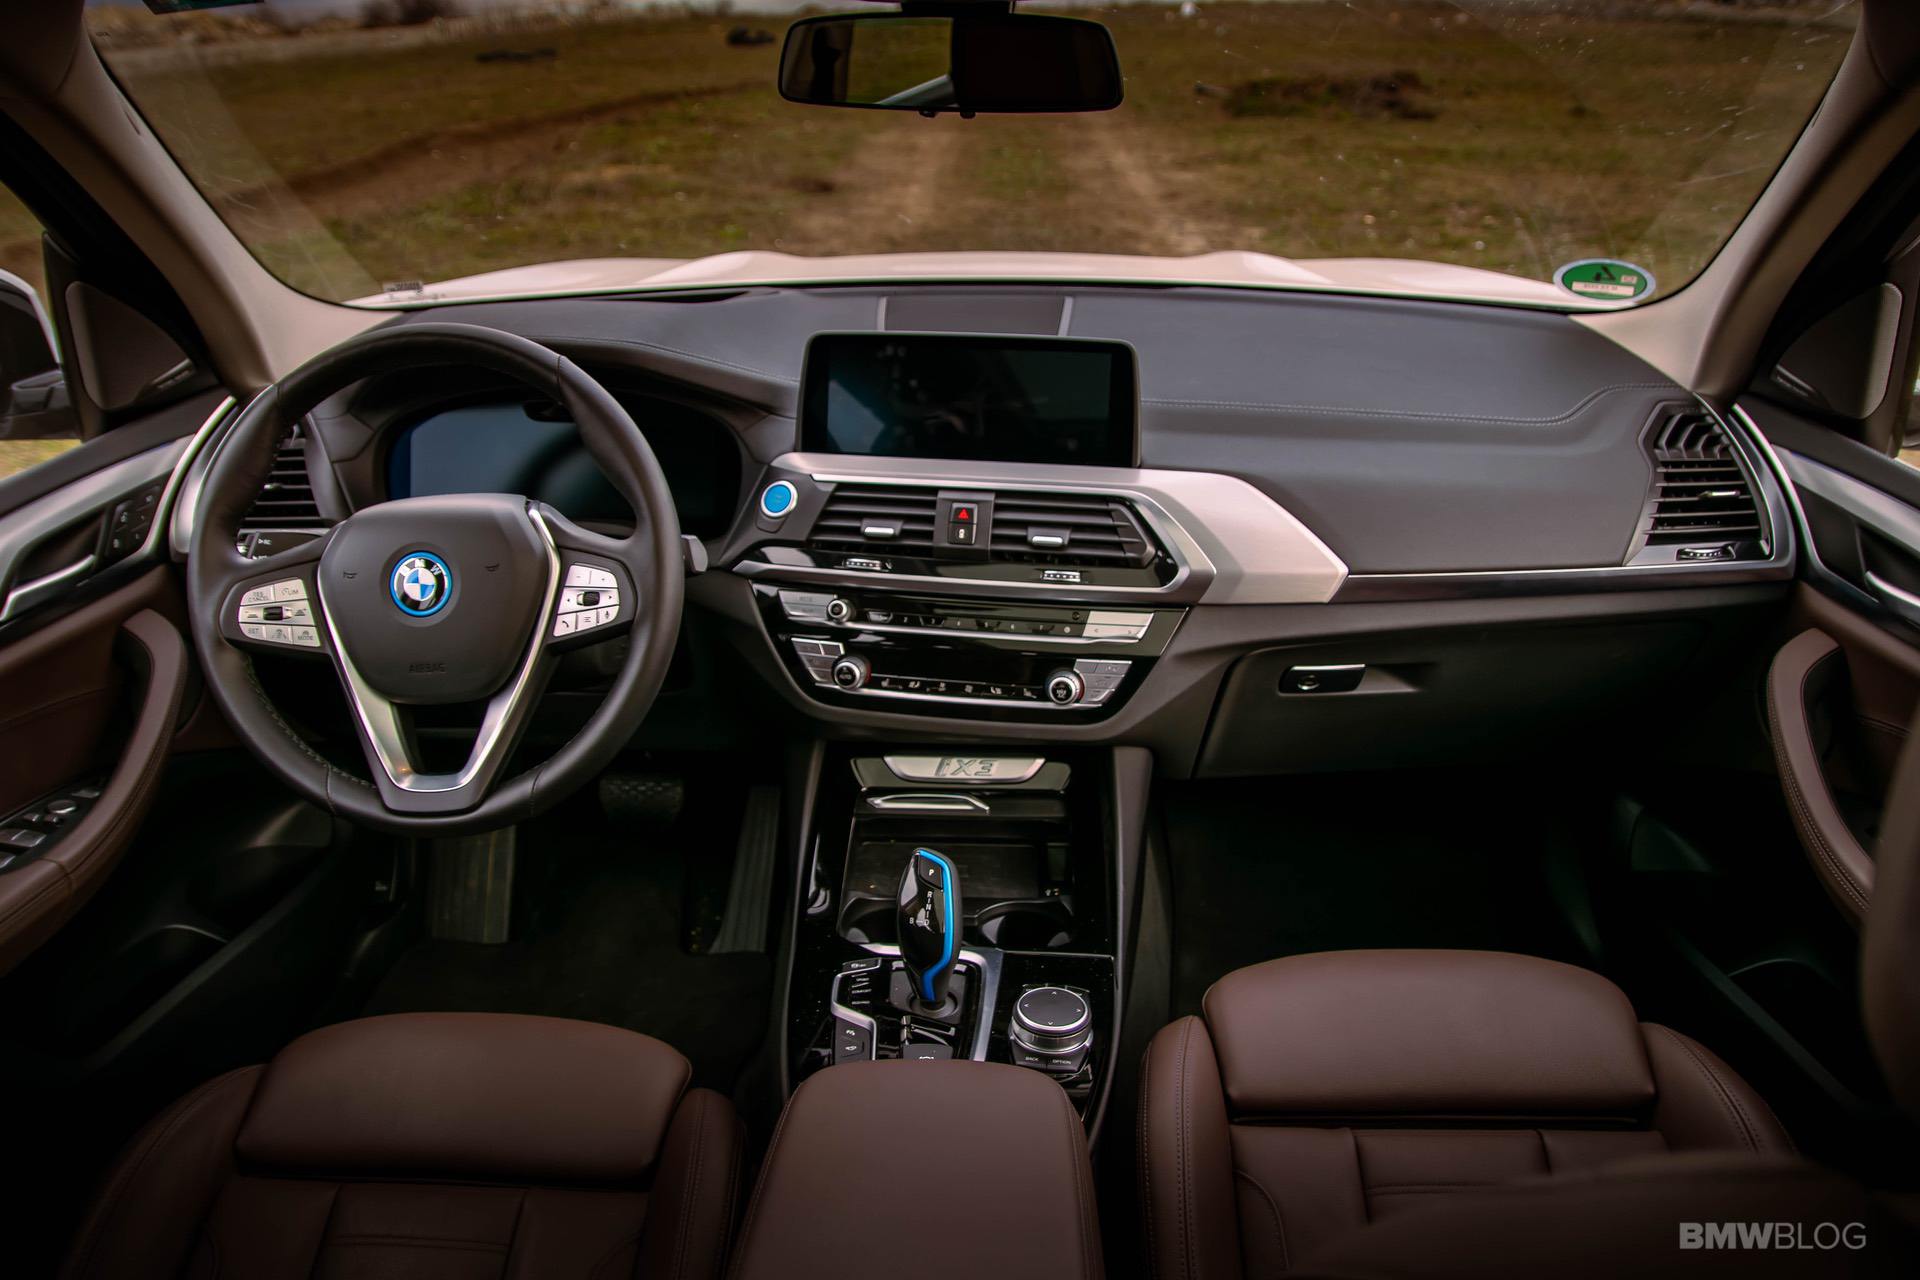 TEST DRIVE: 2021 BMW iX3 Electric SUV – Incremental Steps